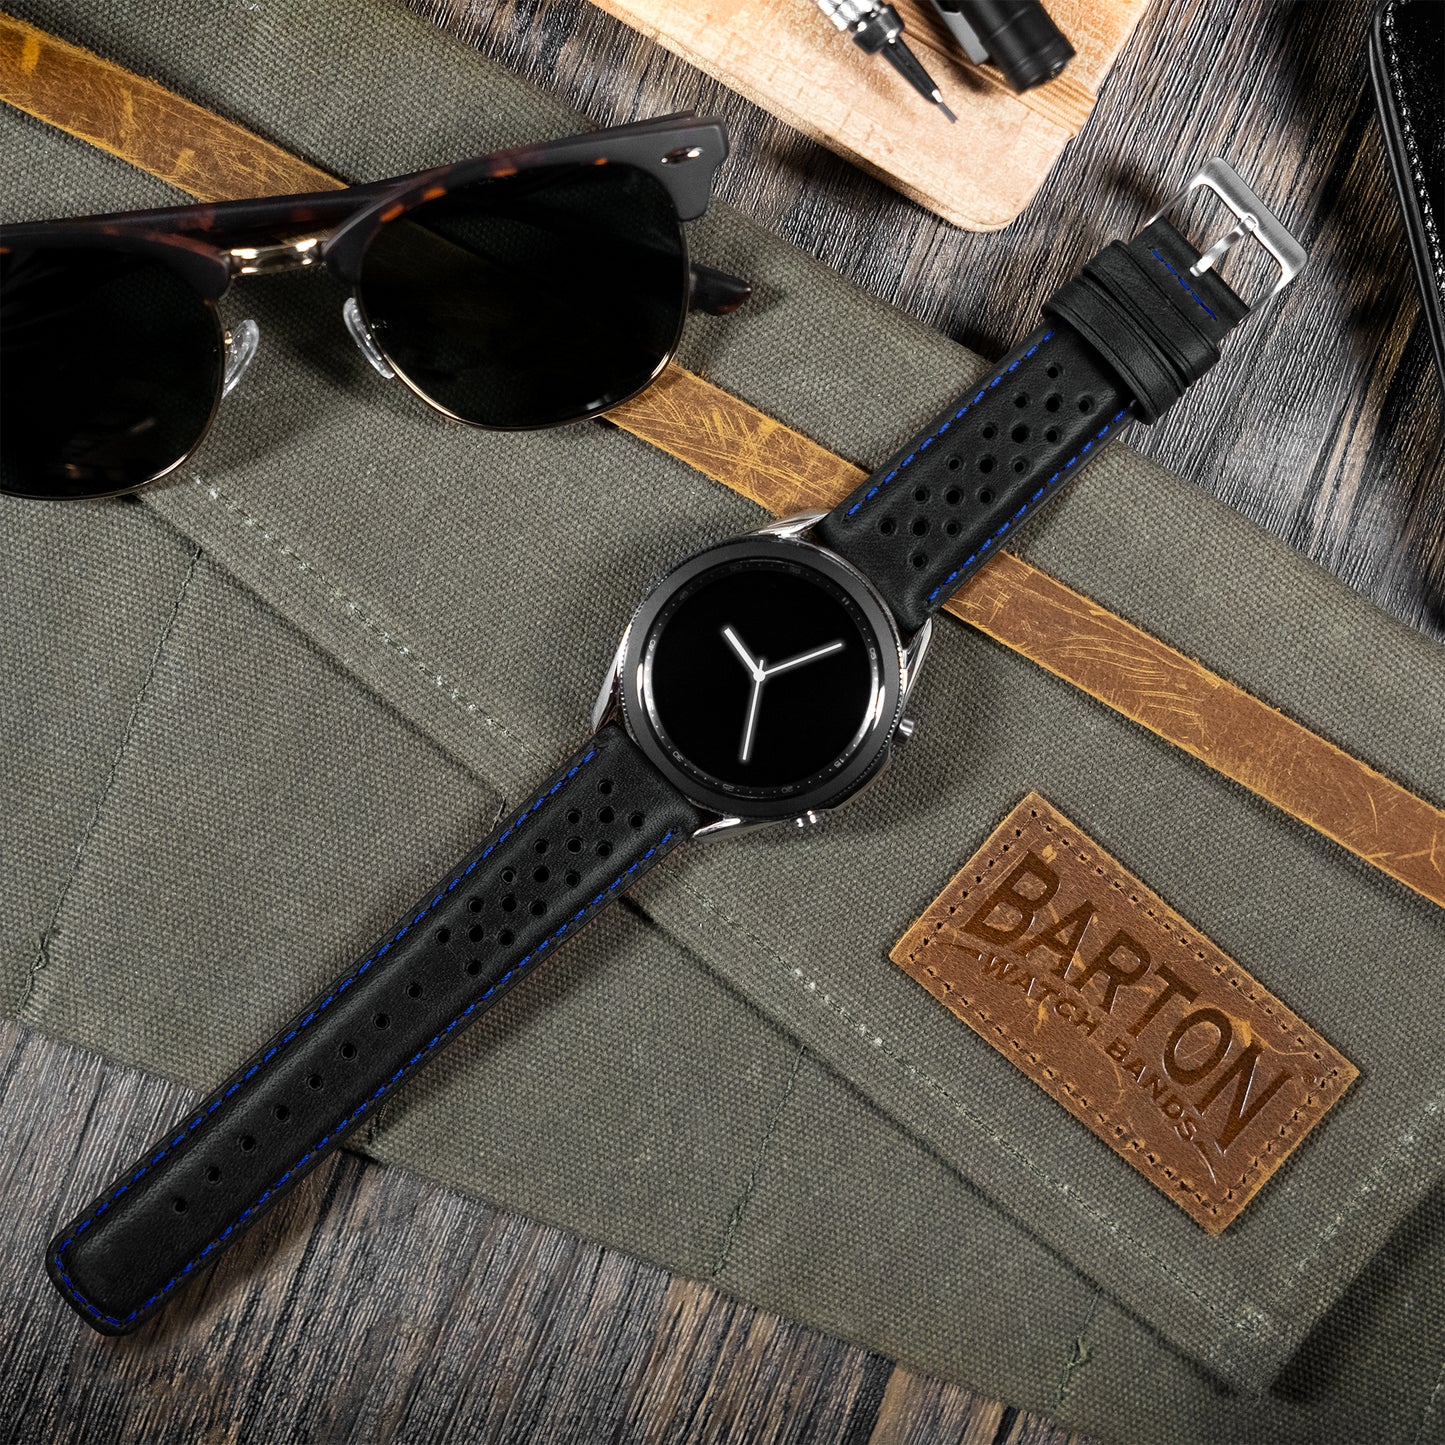 Samsung Galaxy Watch3 Racing Horween Leather Black Blue Stitch Watch Band